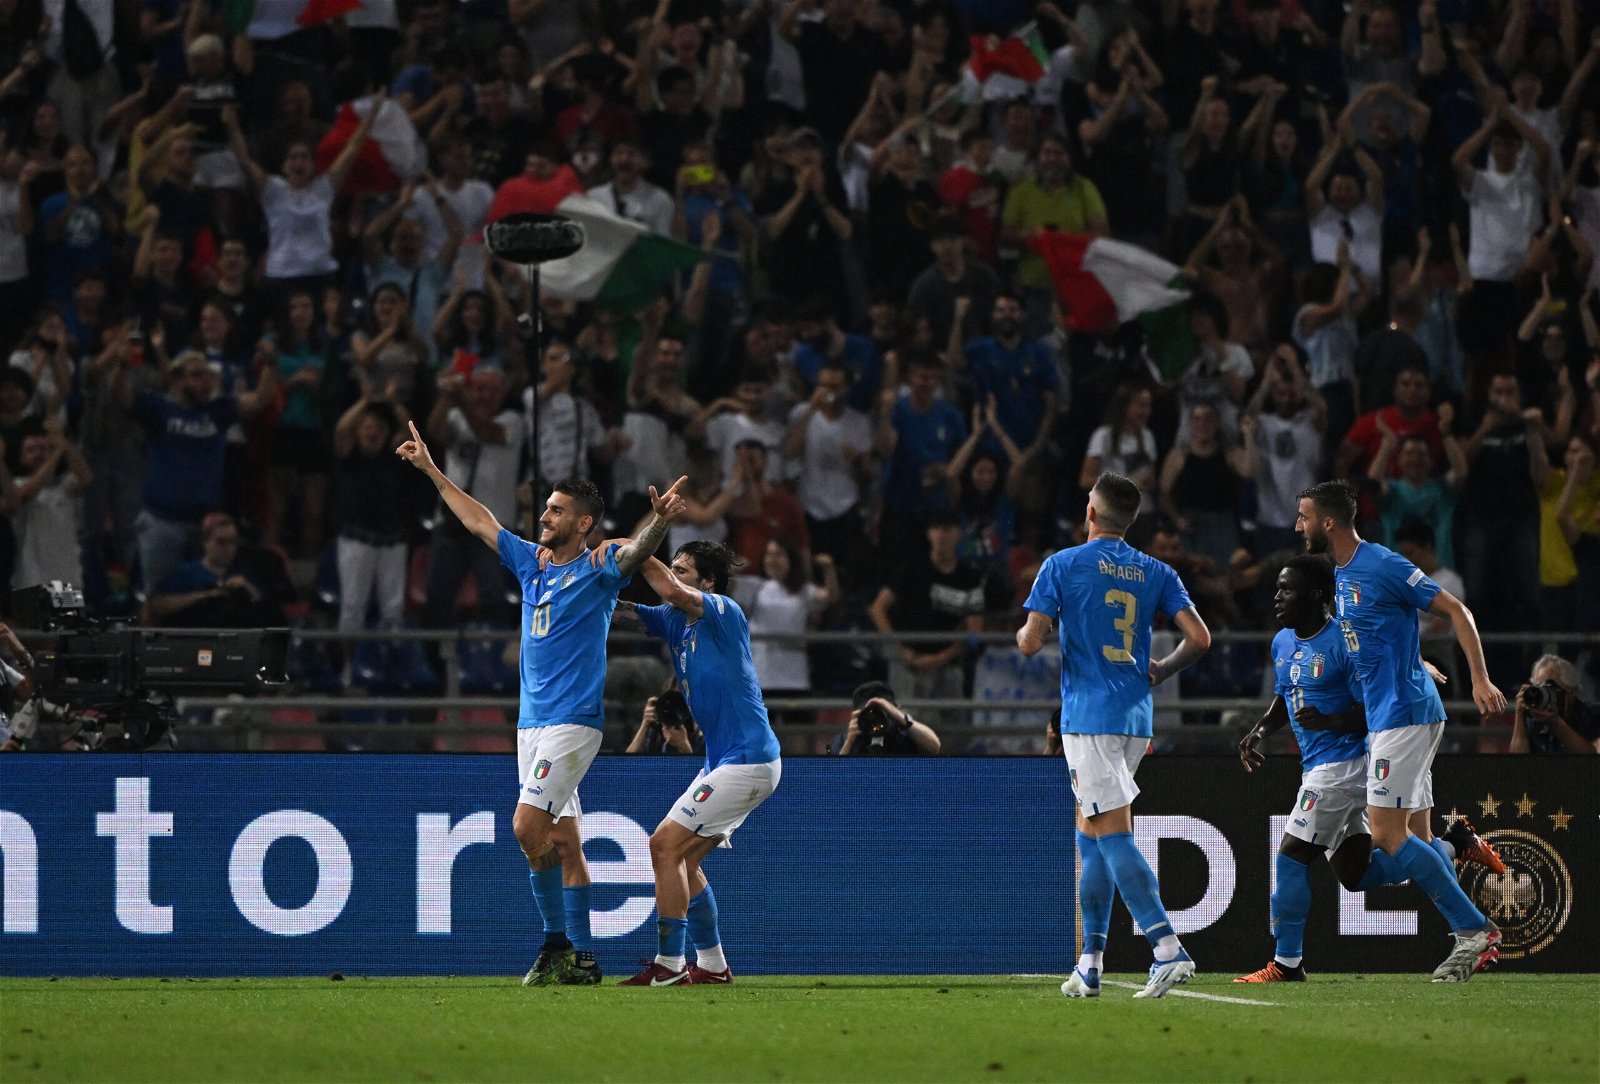 Italy vs Hungary Predicted Starting Lineup